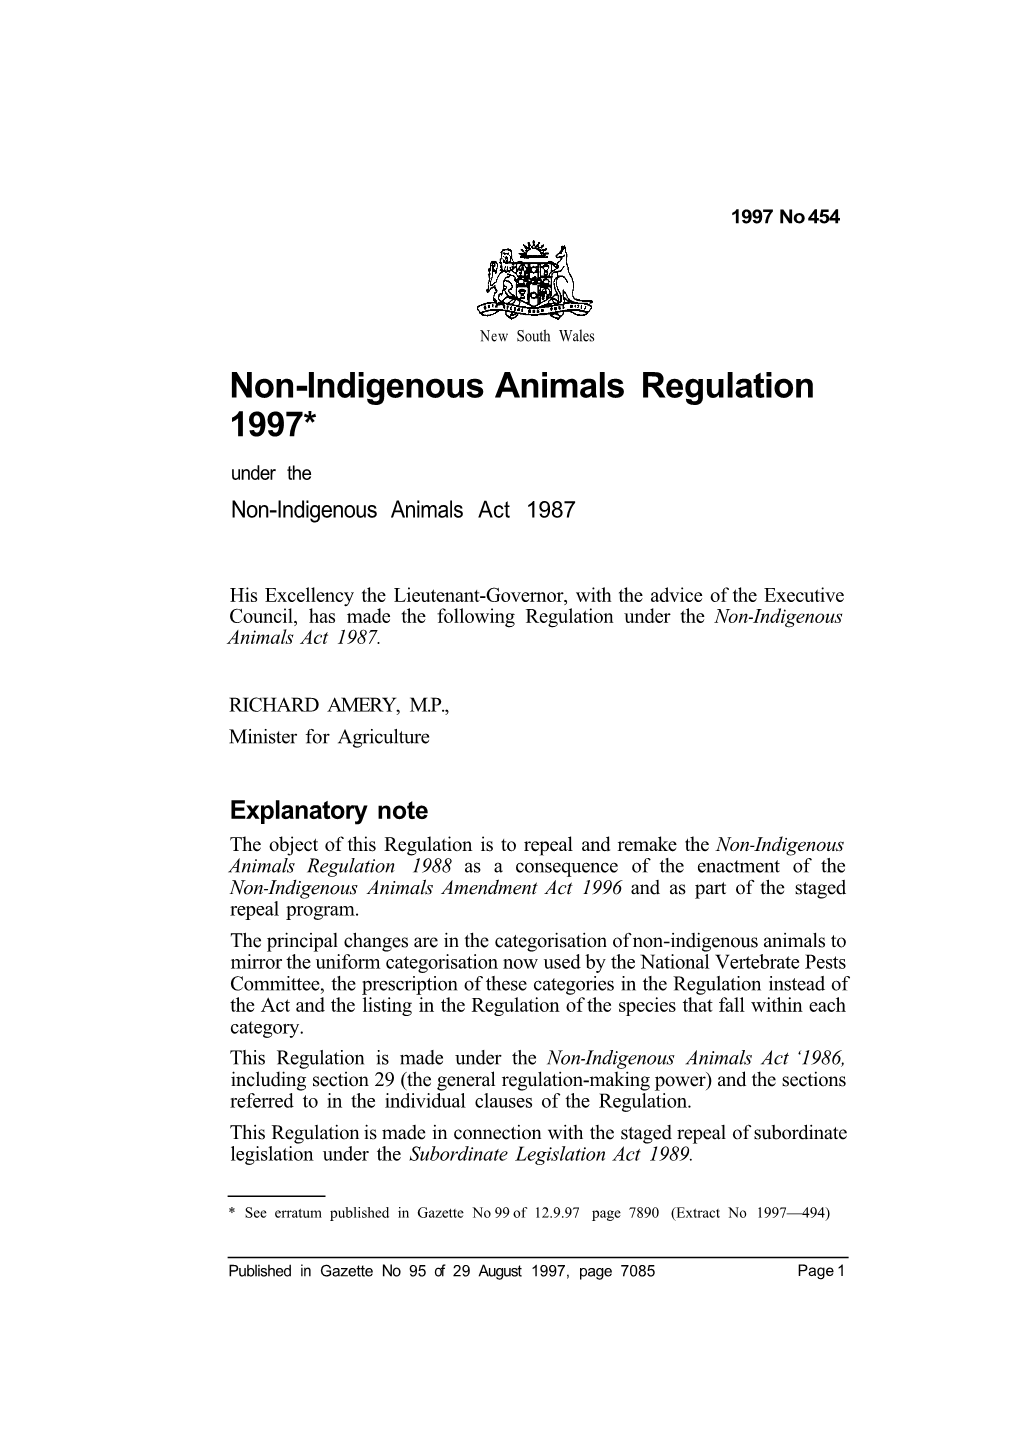 Non-Indigenous Animals Regulation 1997* Under the Non-Indigenous Animals Act 1987